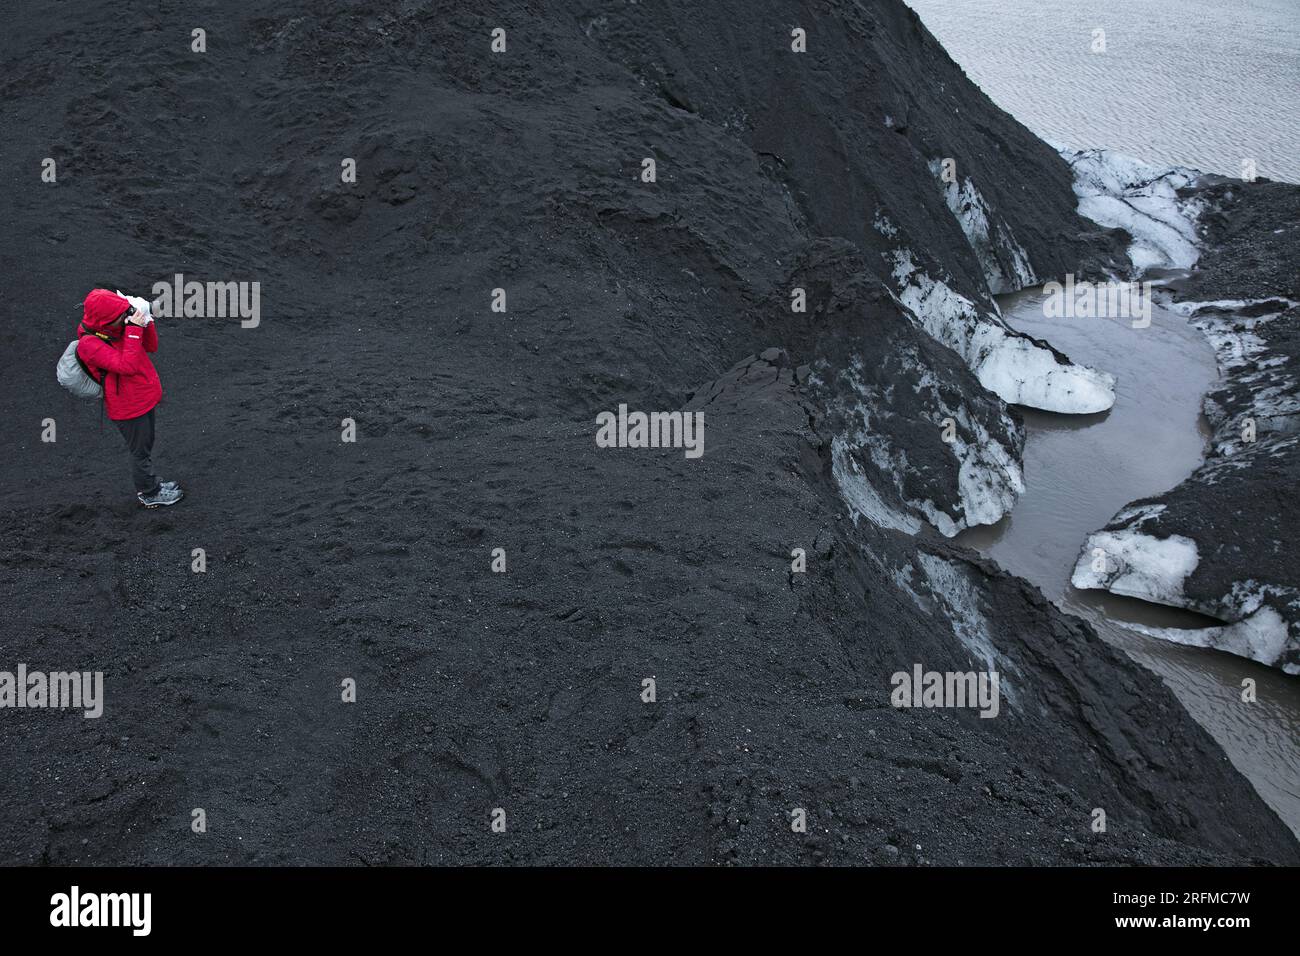 Islande, Sólheimajökull, le glacier couvert de cendre volcanique avec 1 personnage,langue glaciaire du Mýrdalsjökull / Iceland, Sólheimajökull, the volcanic ash-covered glacier with 1 figure, Mýrdalsjökull ice tongue / Stock Photo